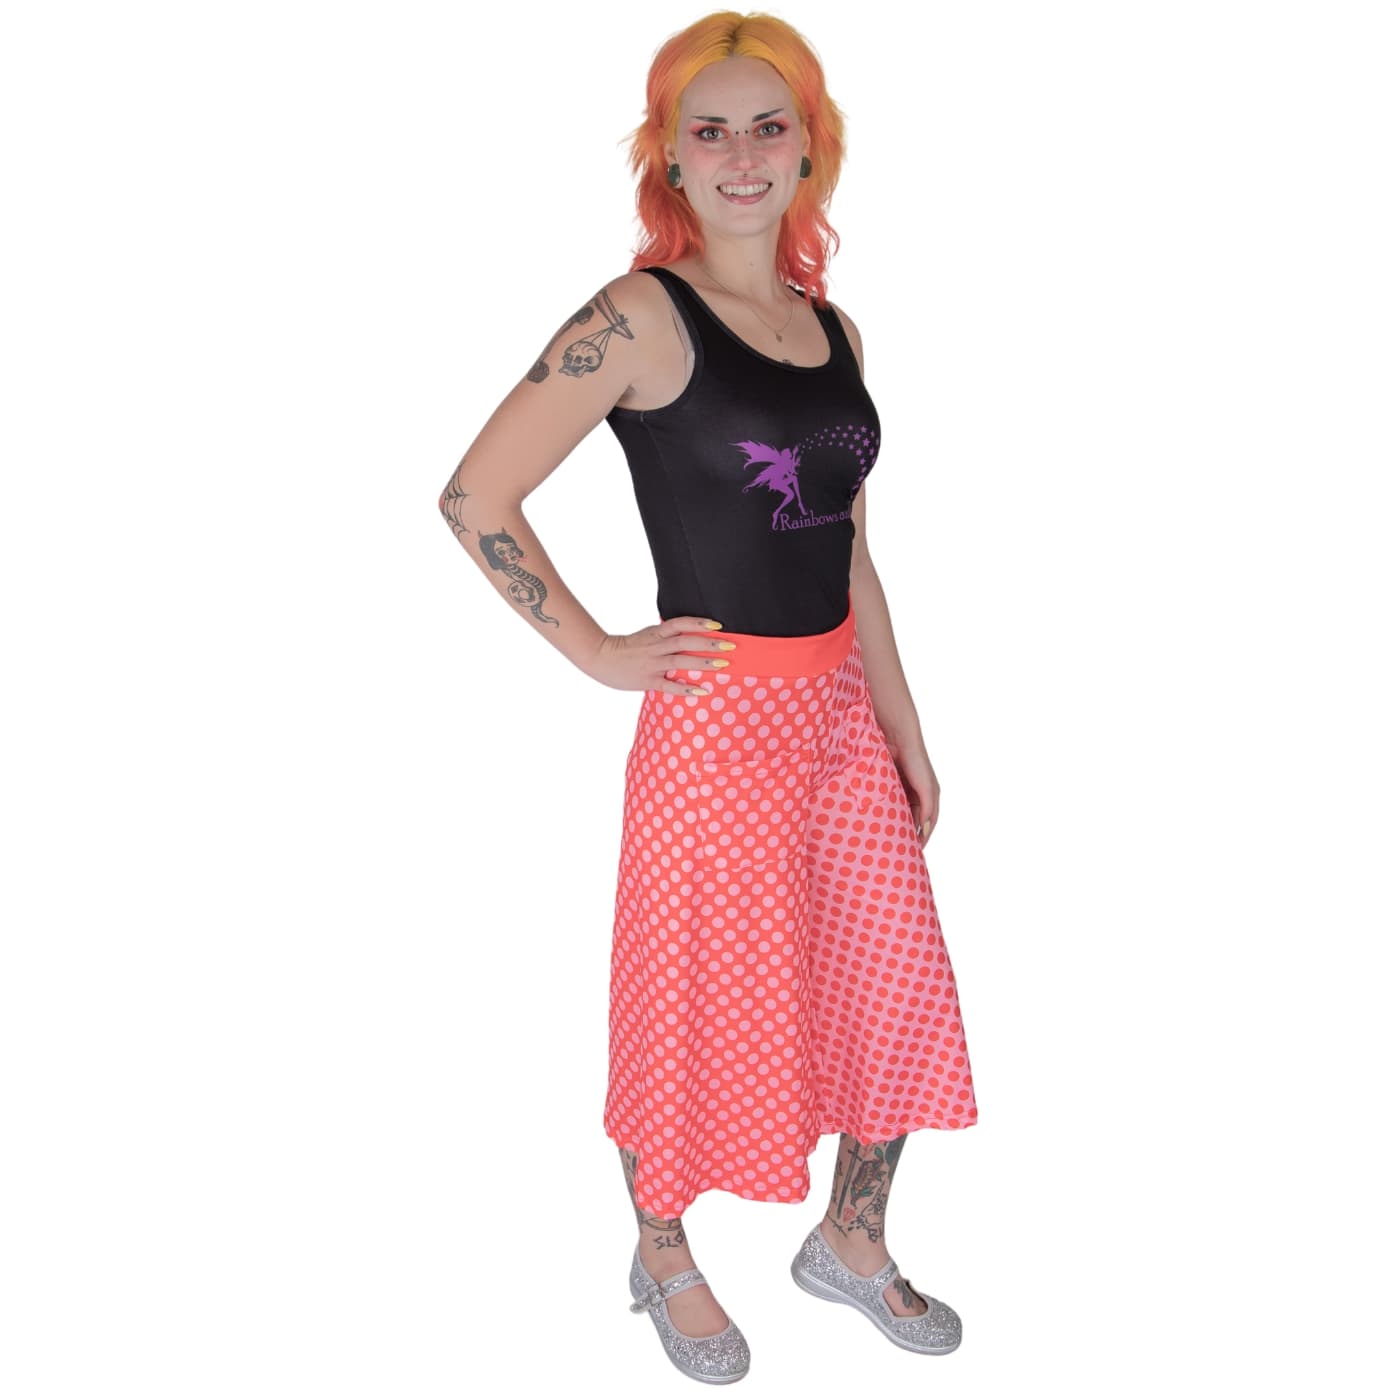 Blush Culottes by RainbowsAndFairies.com.au (Red Polka Dots - Pink Polka Dots - Pink & Red - 3 Quarter Pants - Wide Leg Pants - Vintage Inspired) - SKU: CL_CULTS_BLUSH_ORG - Pic-05